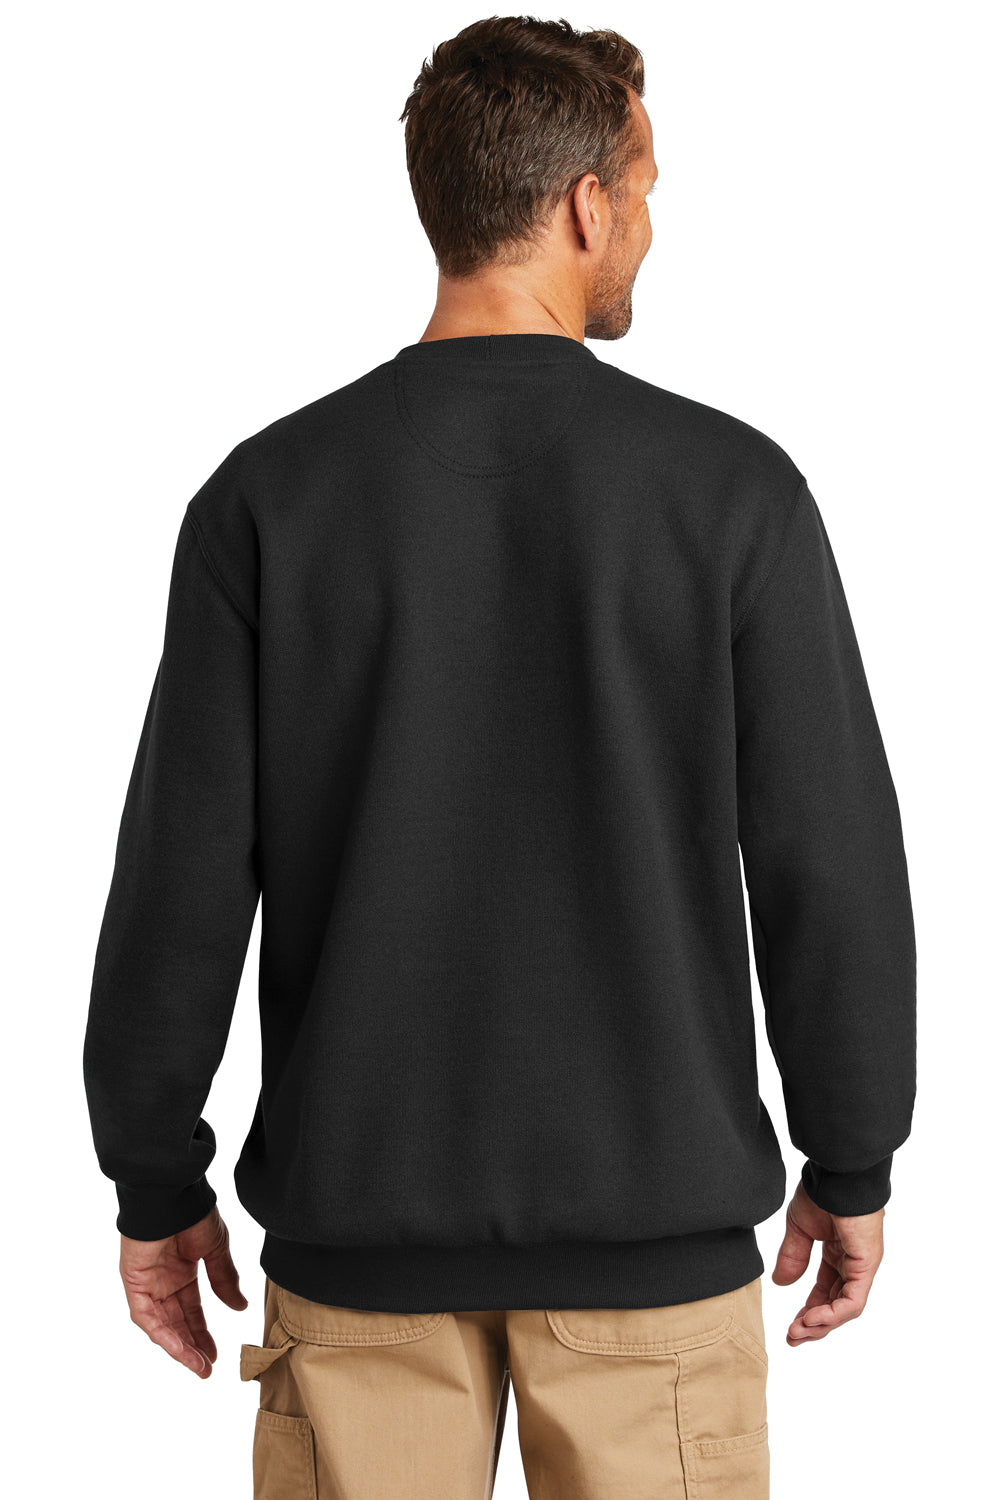 Carhartt CTK124 Mens Crewneck Sweatshirt Black Model Back